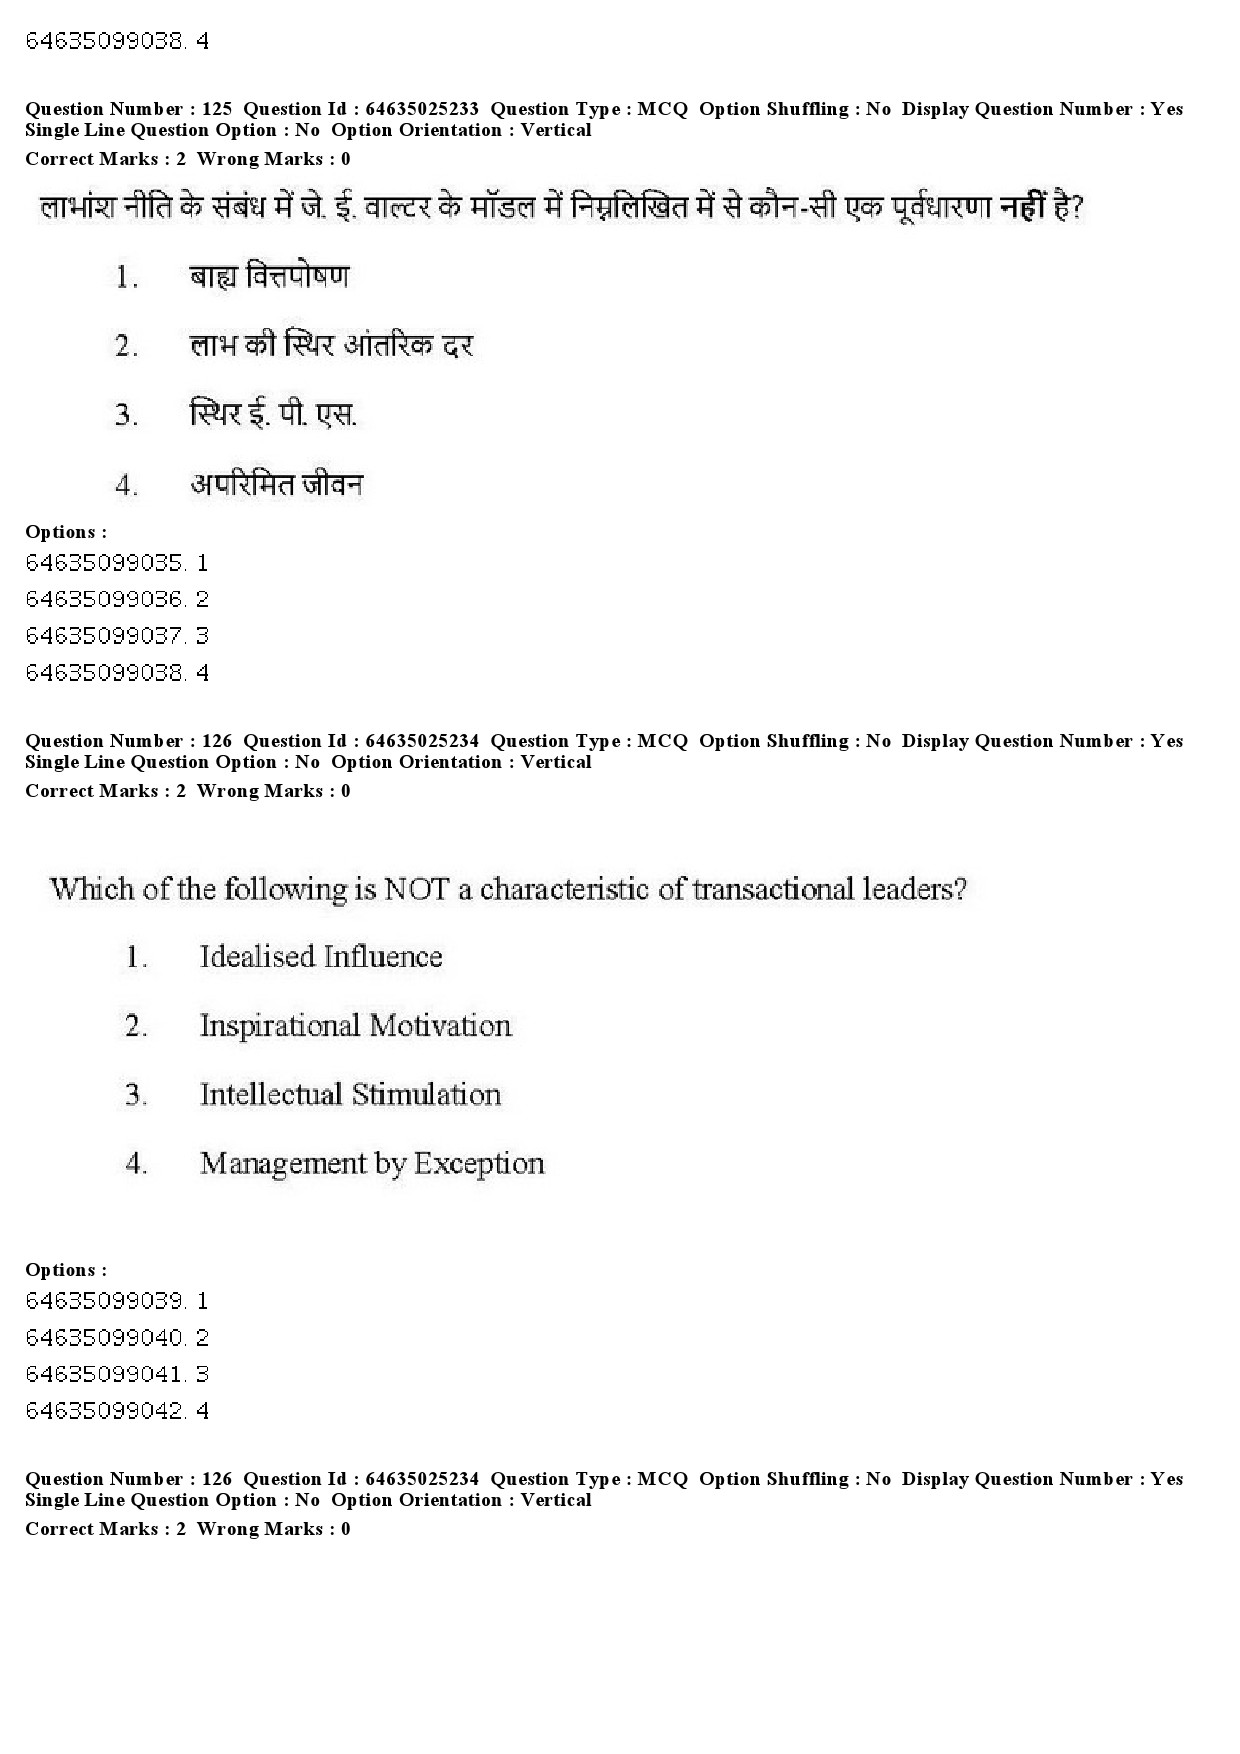 UGC NET Tourism Administration And Management Question Paper June 2019 129